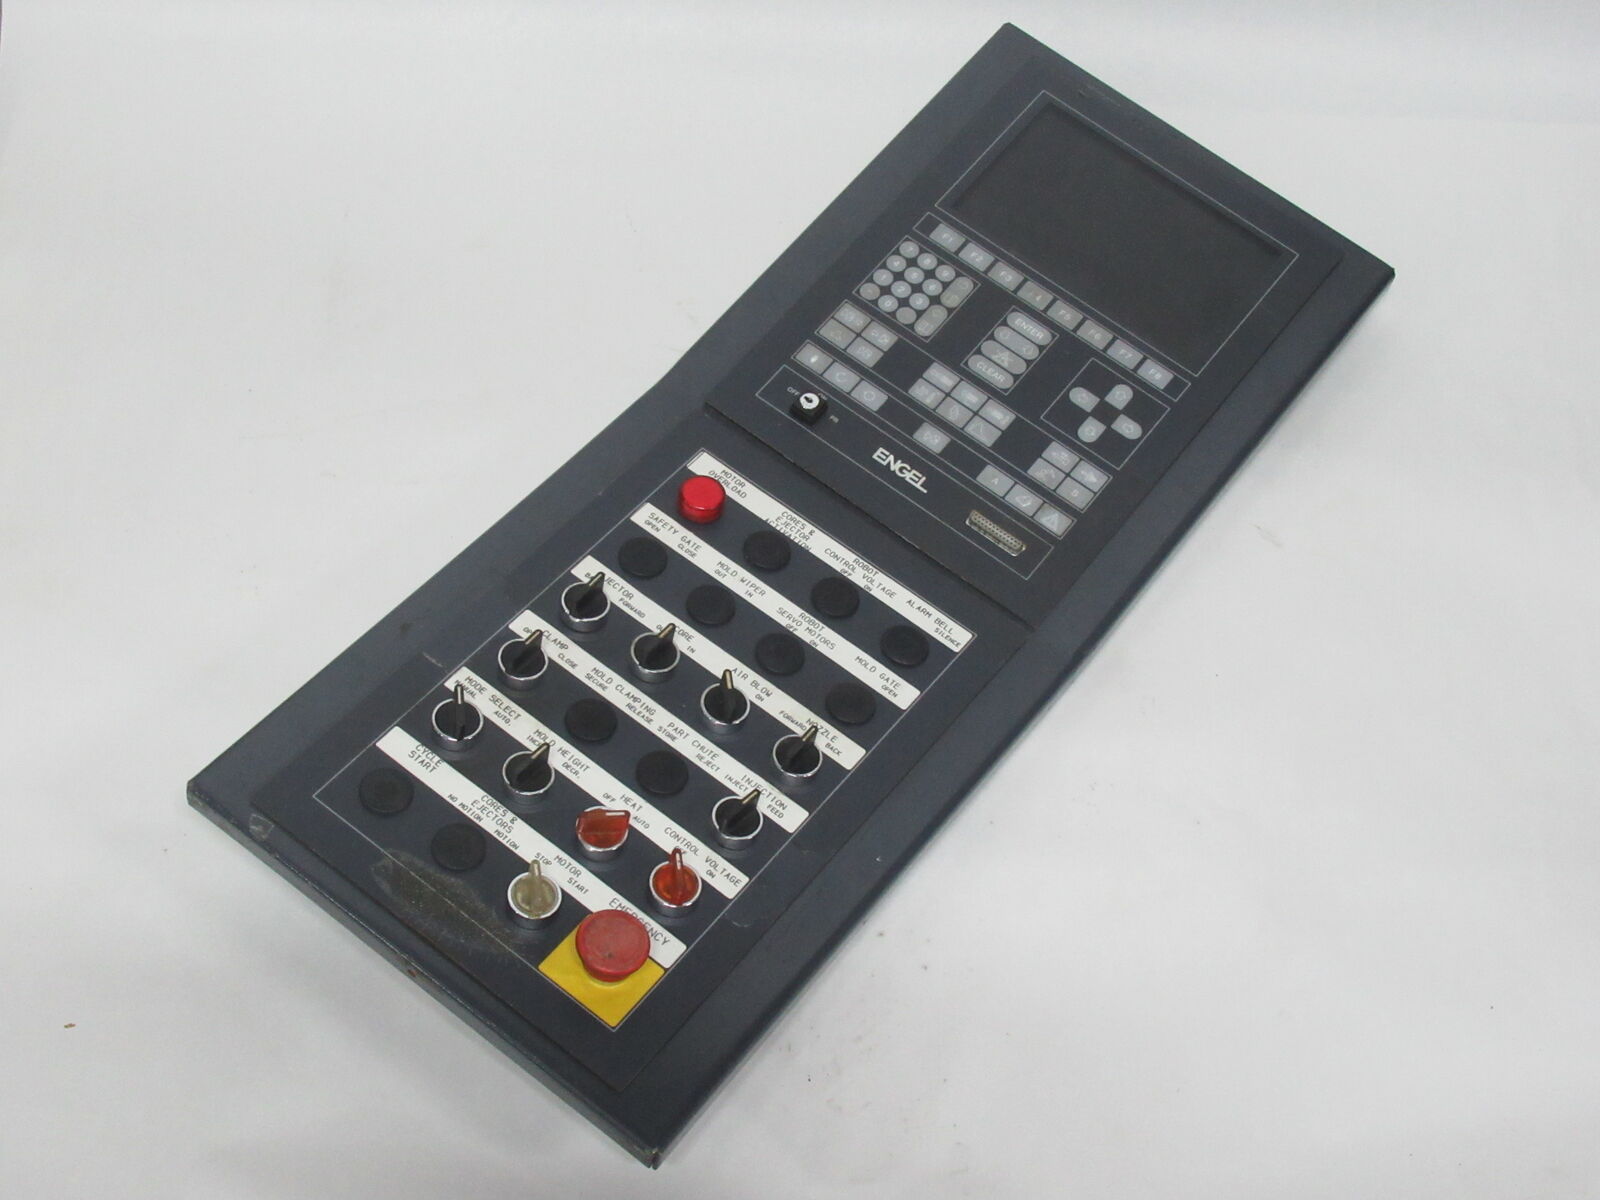 KEBA Engel E-CON-ELD/B/15084 Operator Interface Panel AS IS